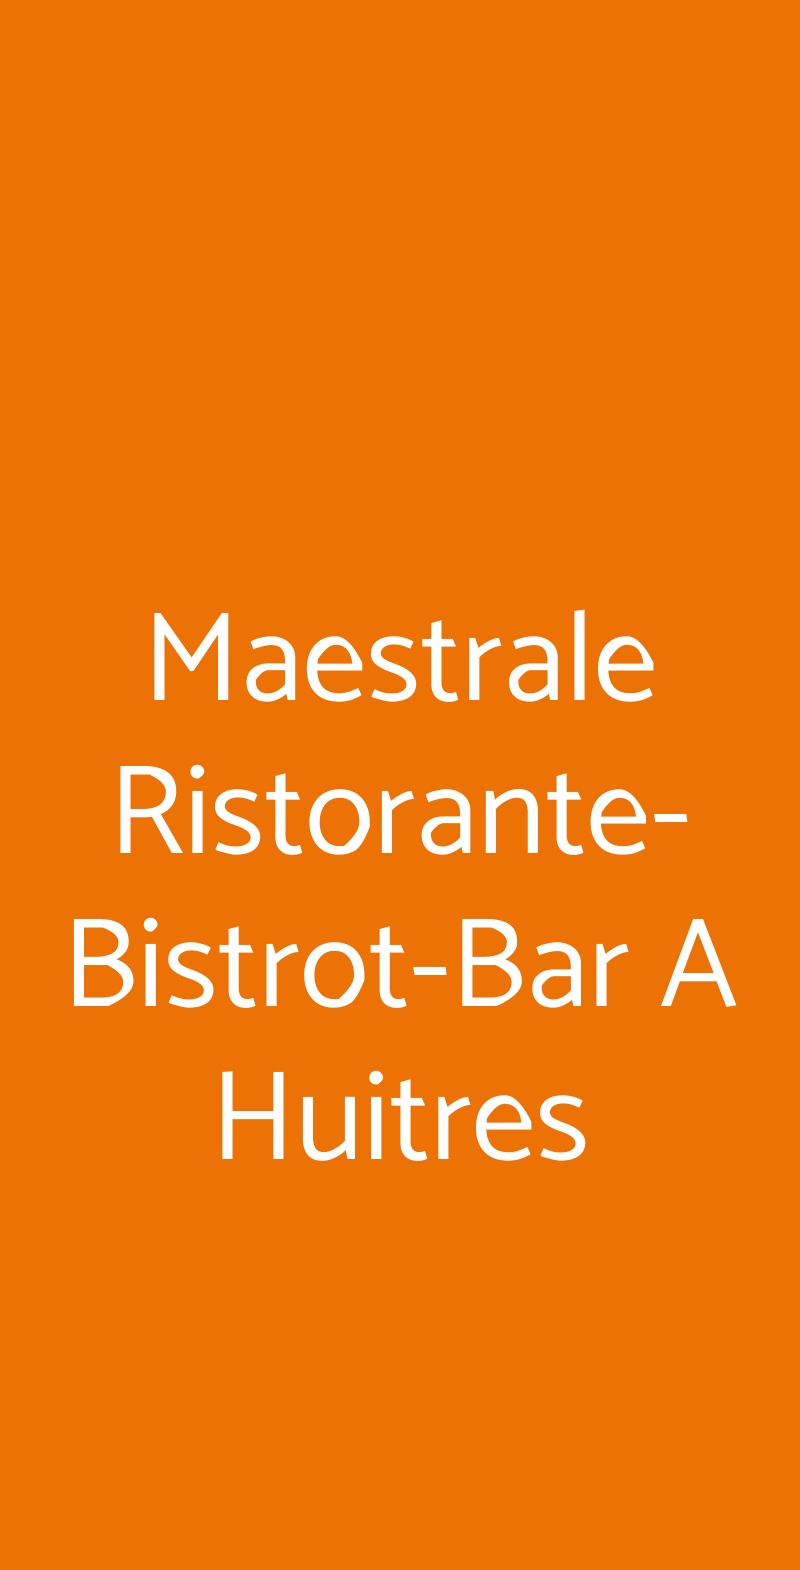 Maestrale Ristorante-Bistrot-Bar A Huitres Leini menù 1 pagina